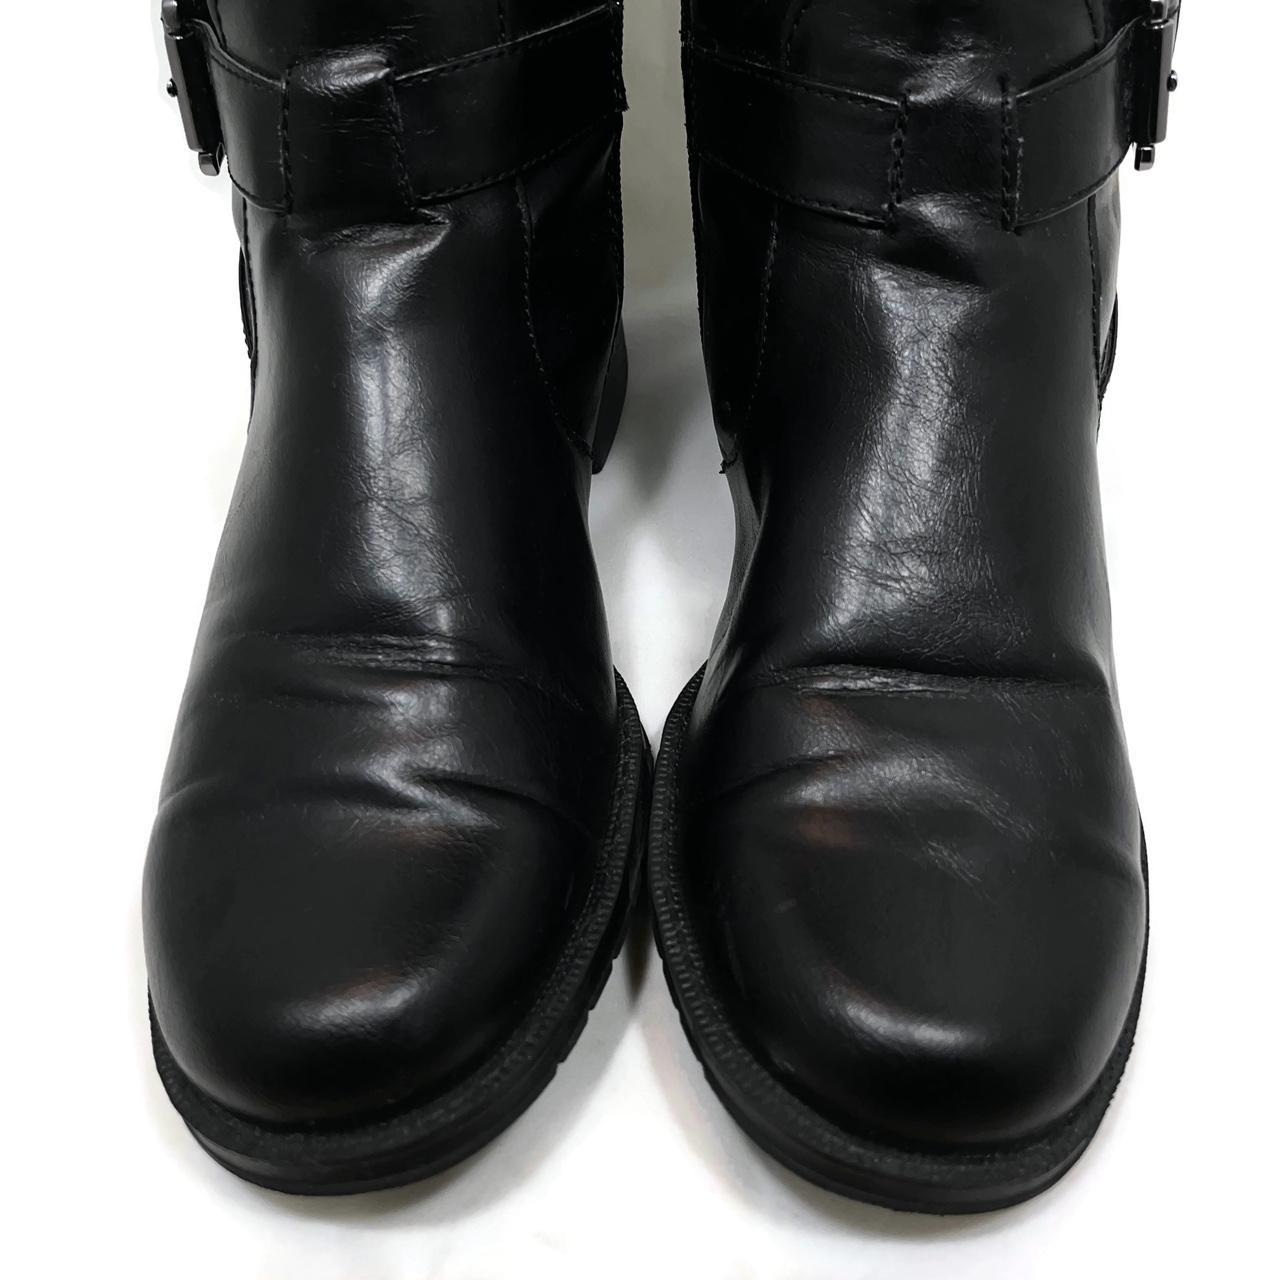 Aerosoles Women's Black Boots (6)